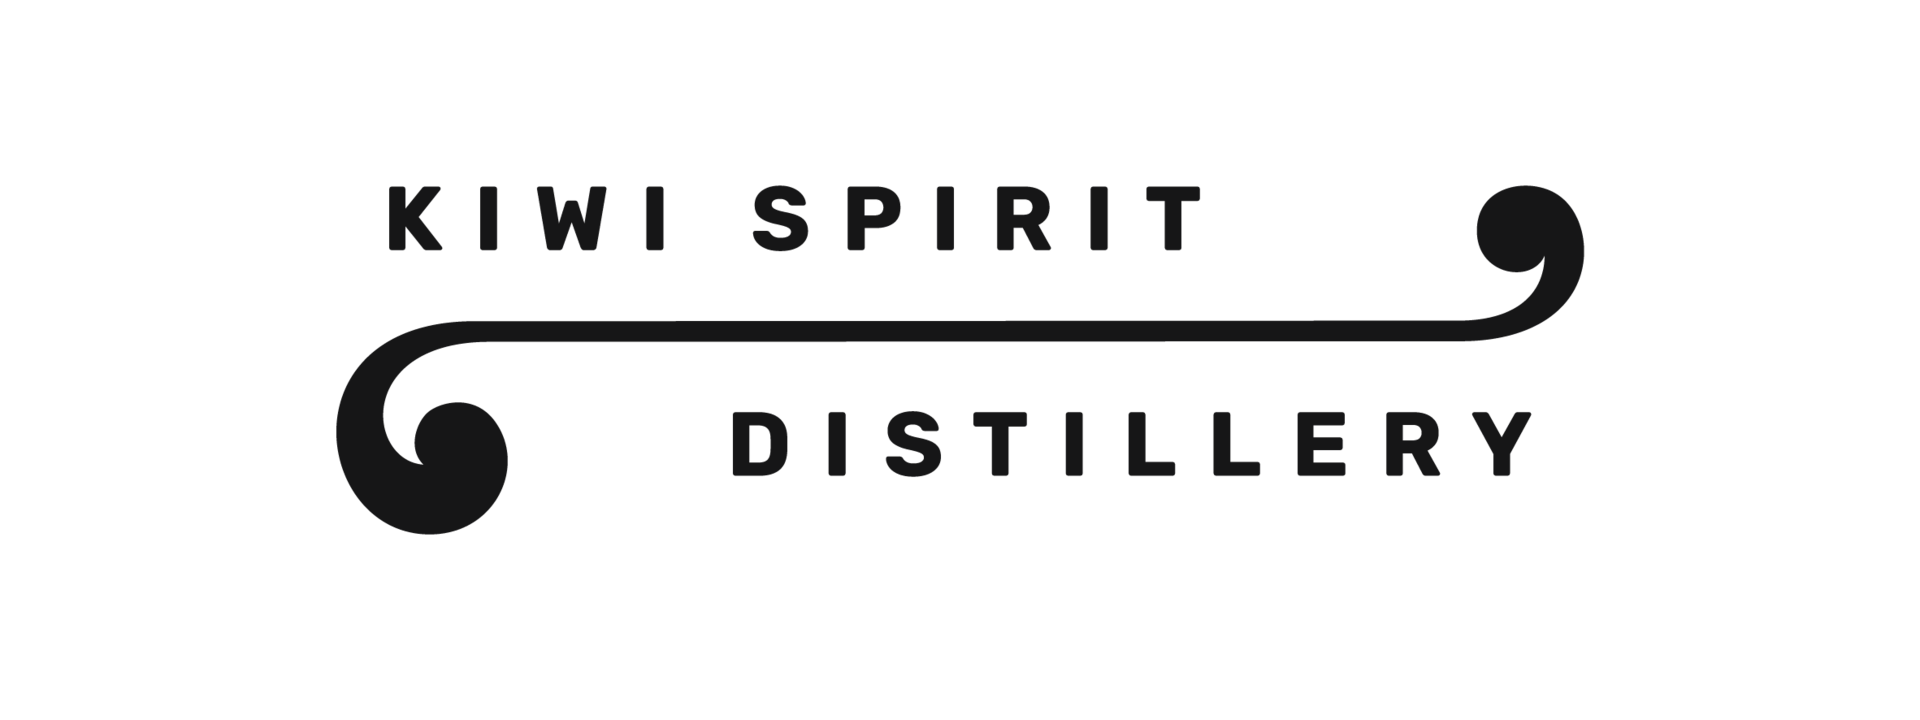 kiwi-spirit-distillery-main-logo-set_kiwi-spirit-distillery-main-logo-1-black.png